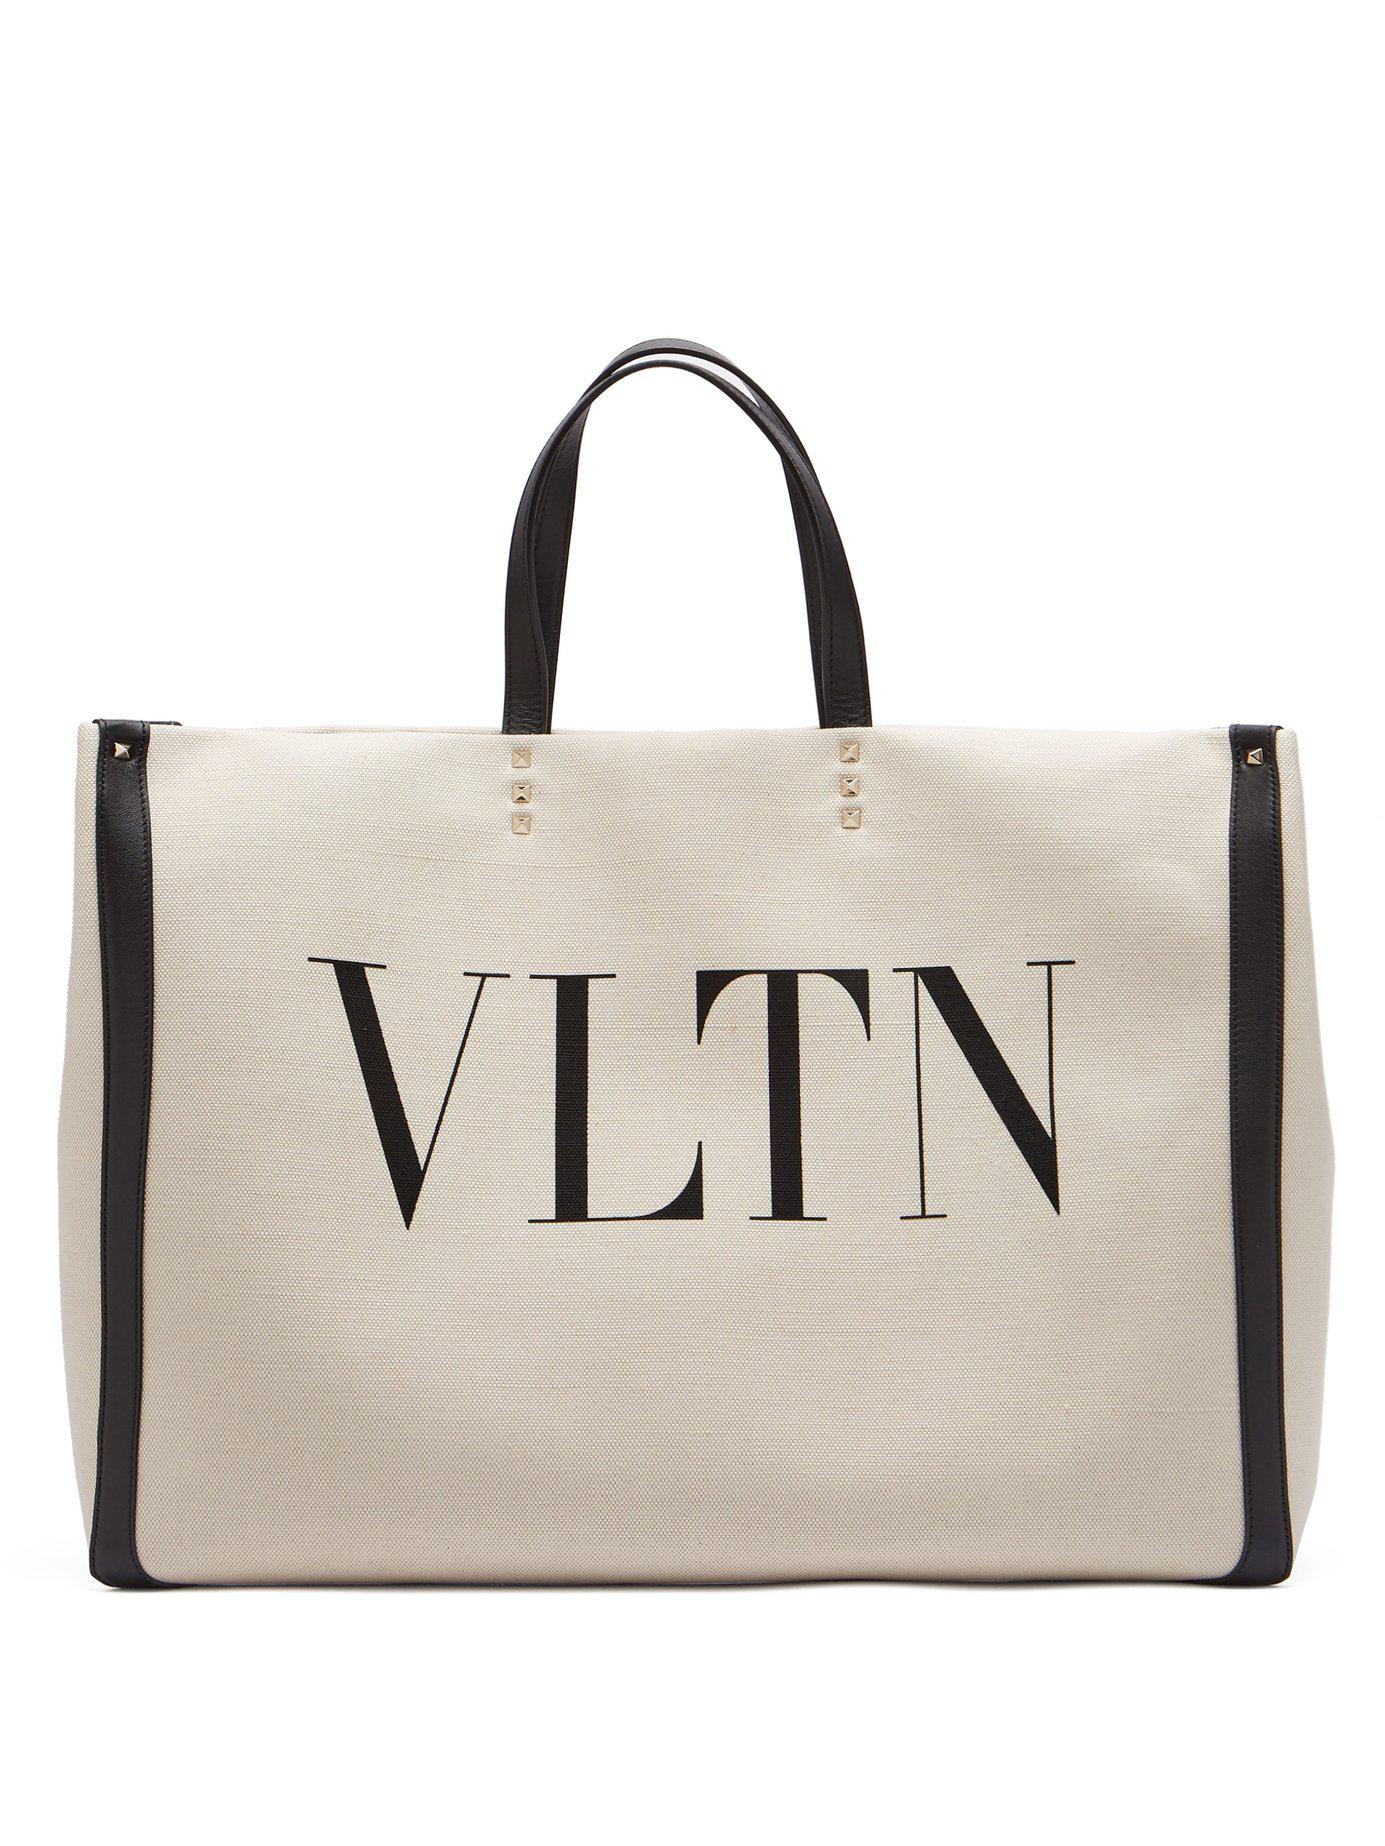 Valentino Garavani Vltn Canvas Shopper Bag in (Natural) - Lyst